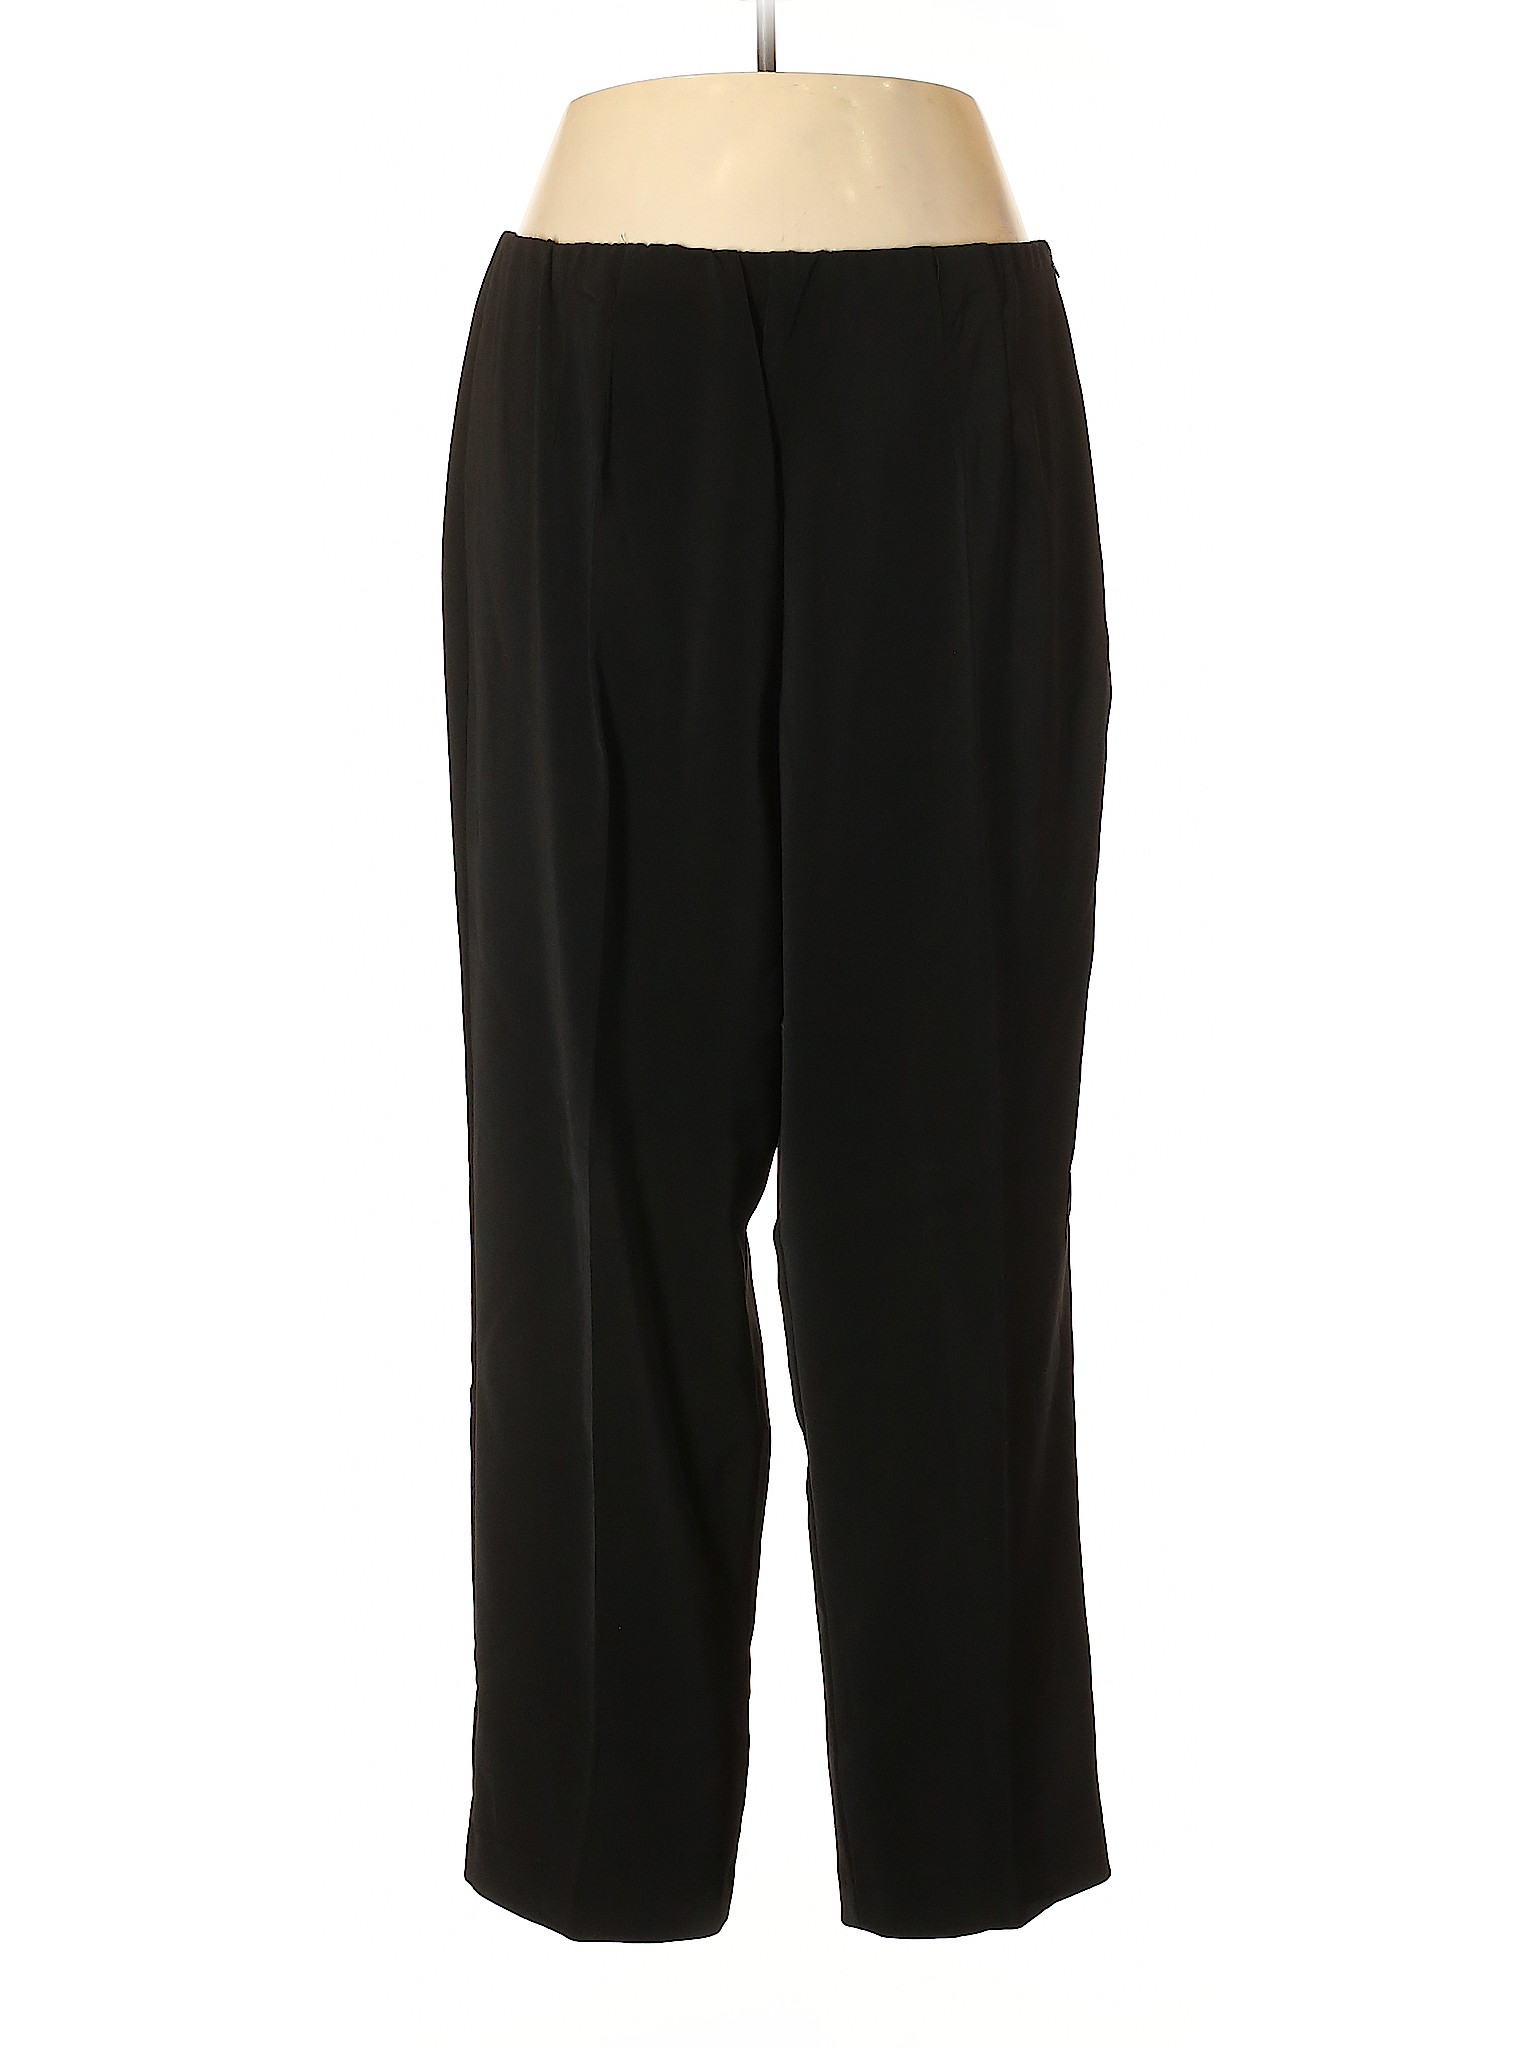 Unbranded Women Black Casual Pants 20 Plus | eBay